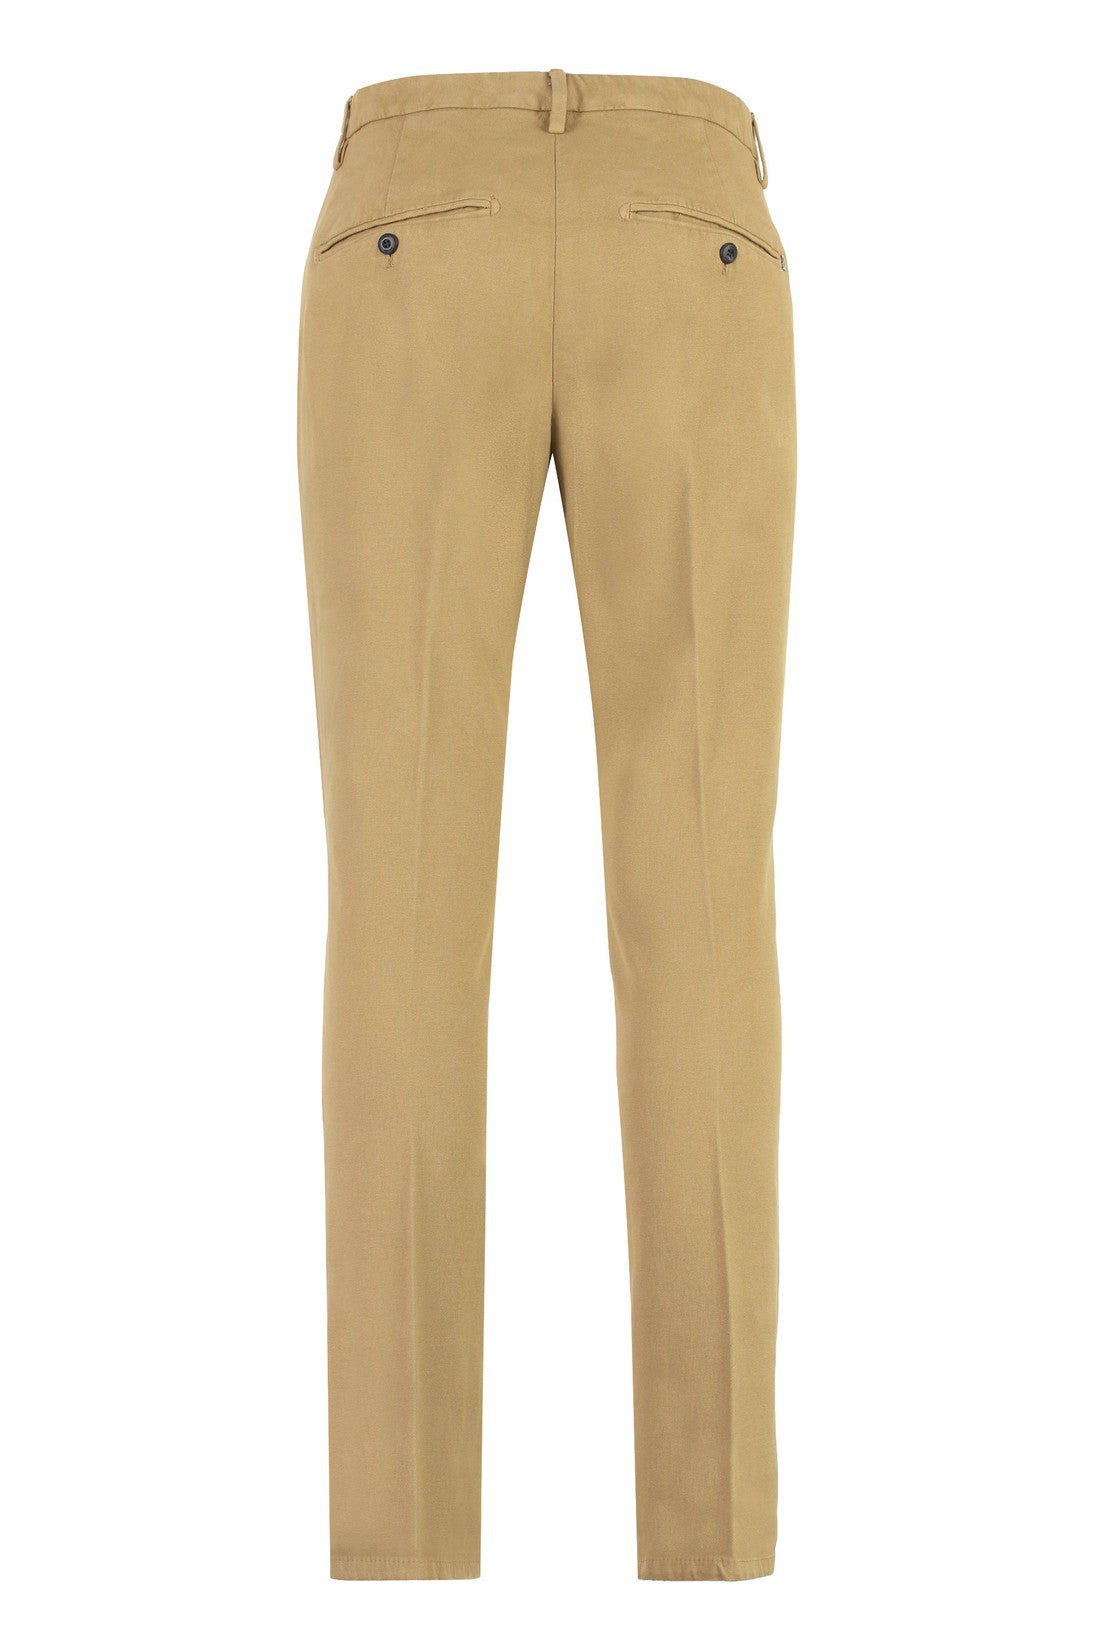 Dondup-OUTLET-SALE-Gaubert Cotton Chino trousers-ARCHIVIST